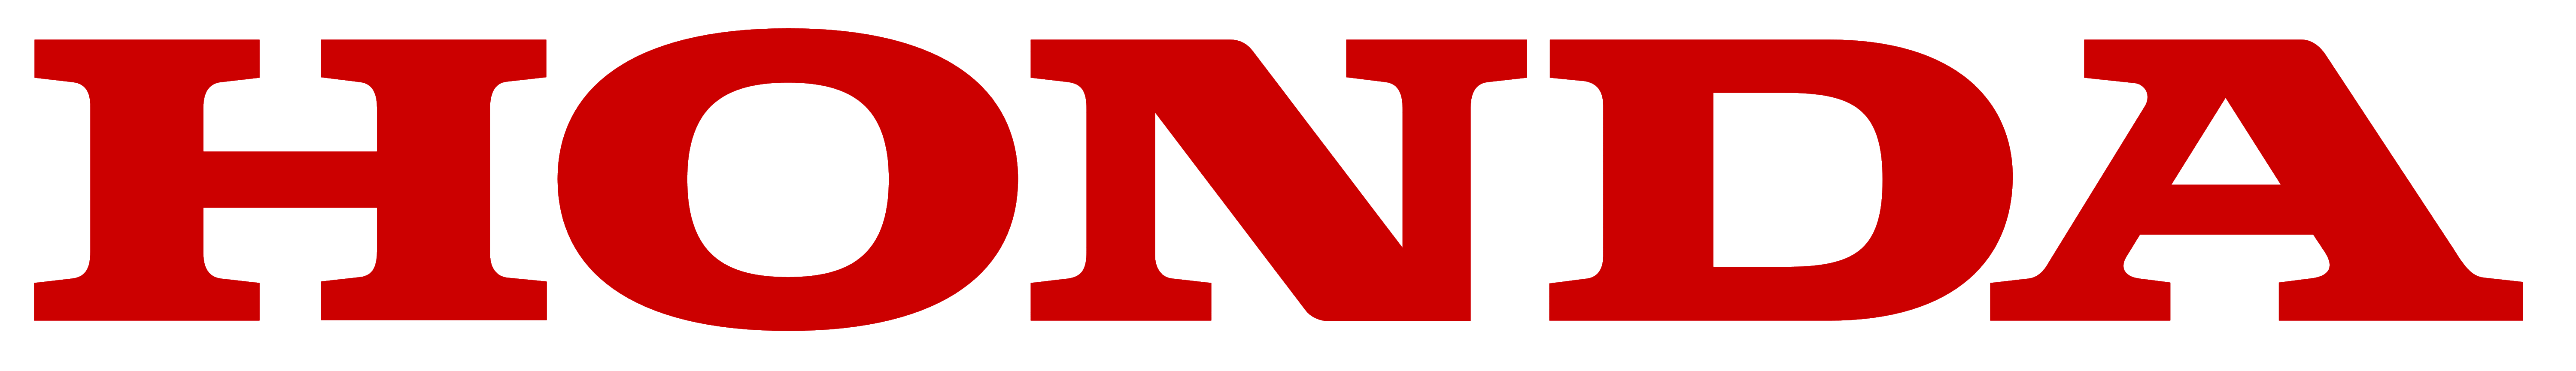 manufacture logo